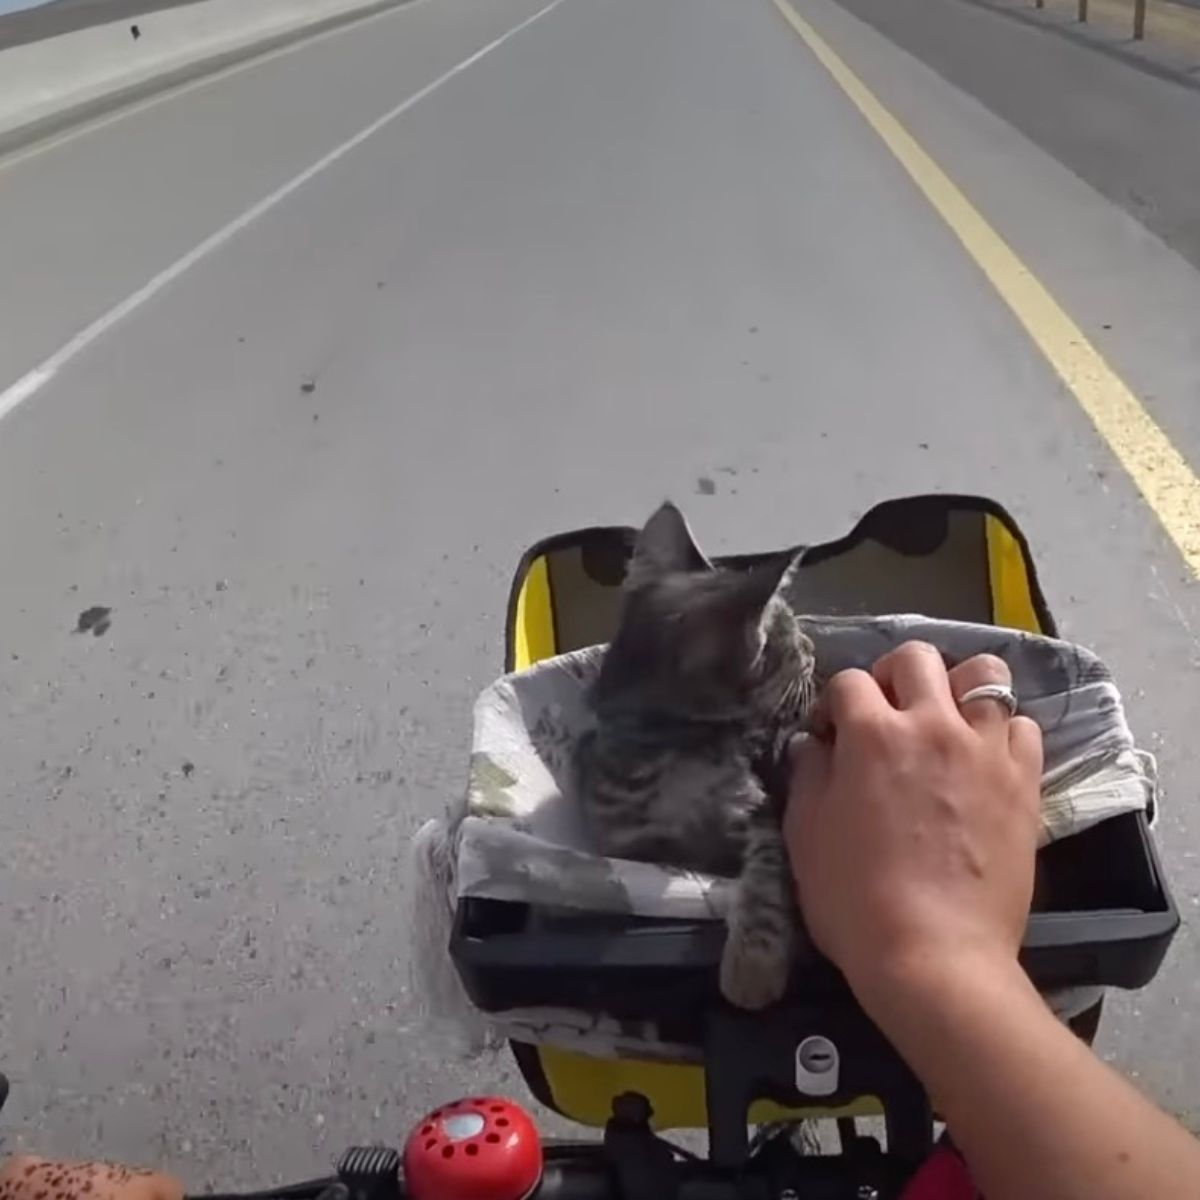 kitten riding in a box on a bike